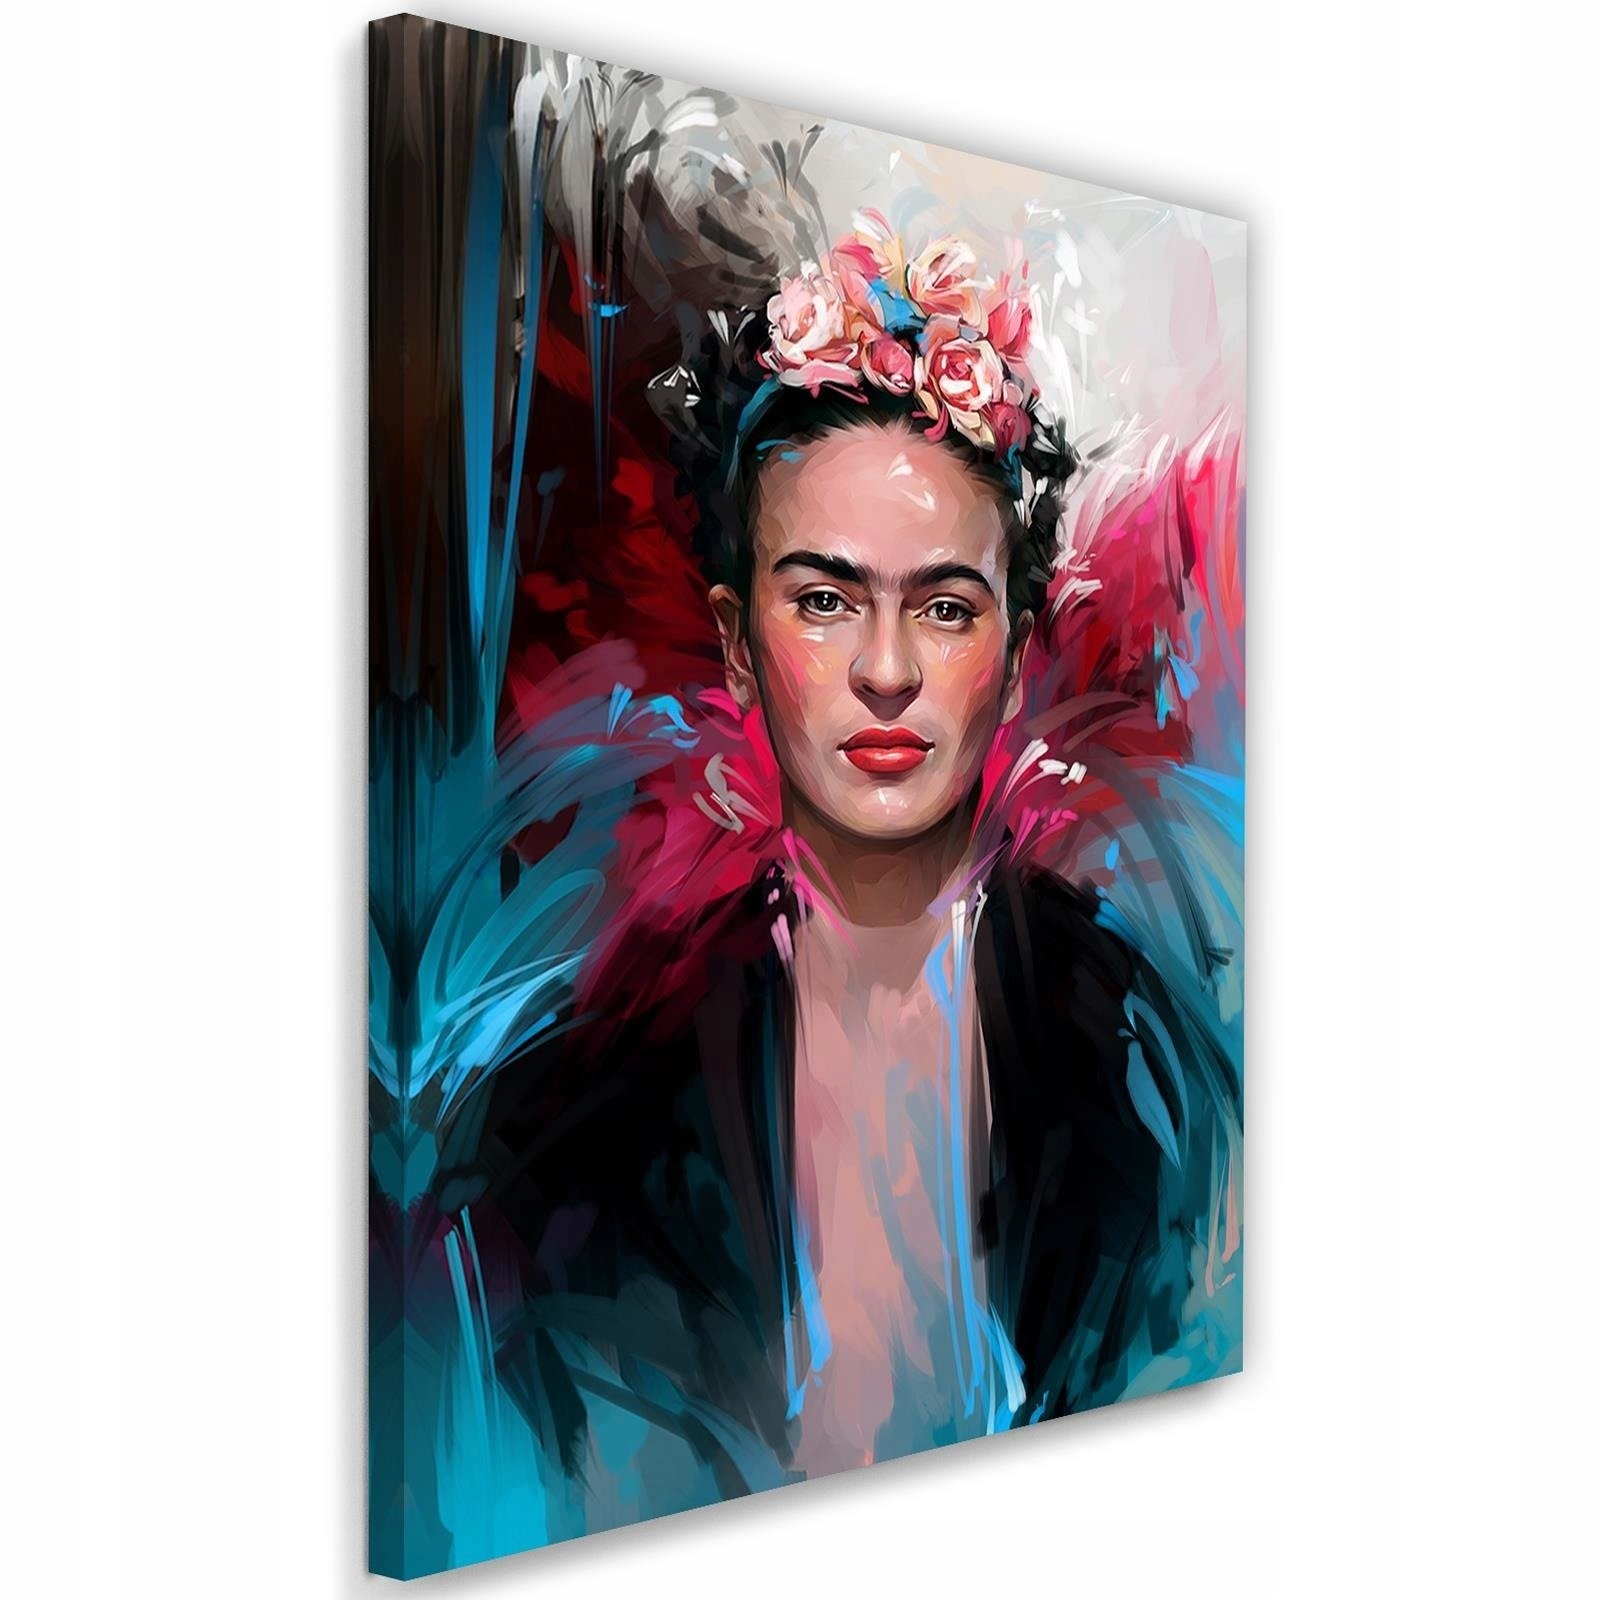 

Obraz płótno Frida Kahlo portert malarki 80x120